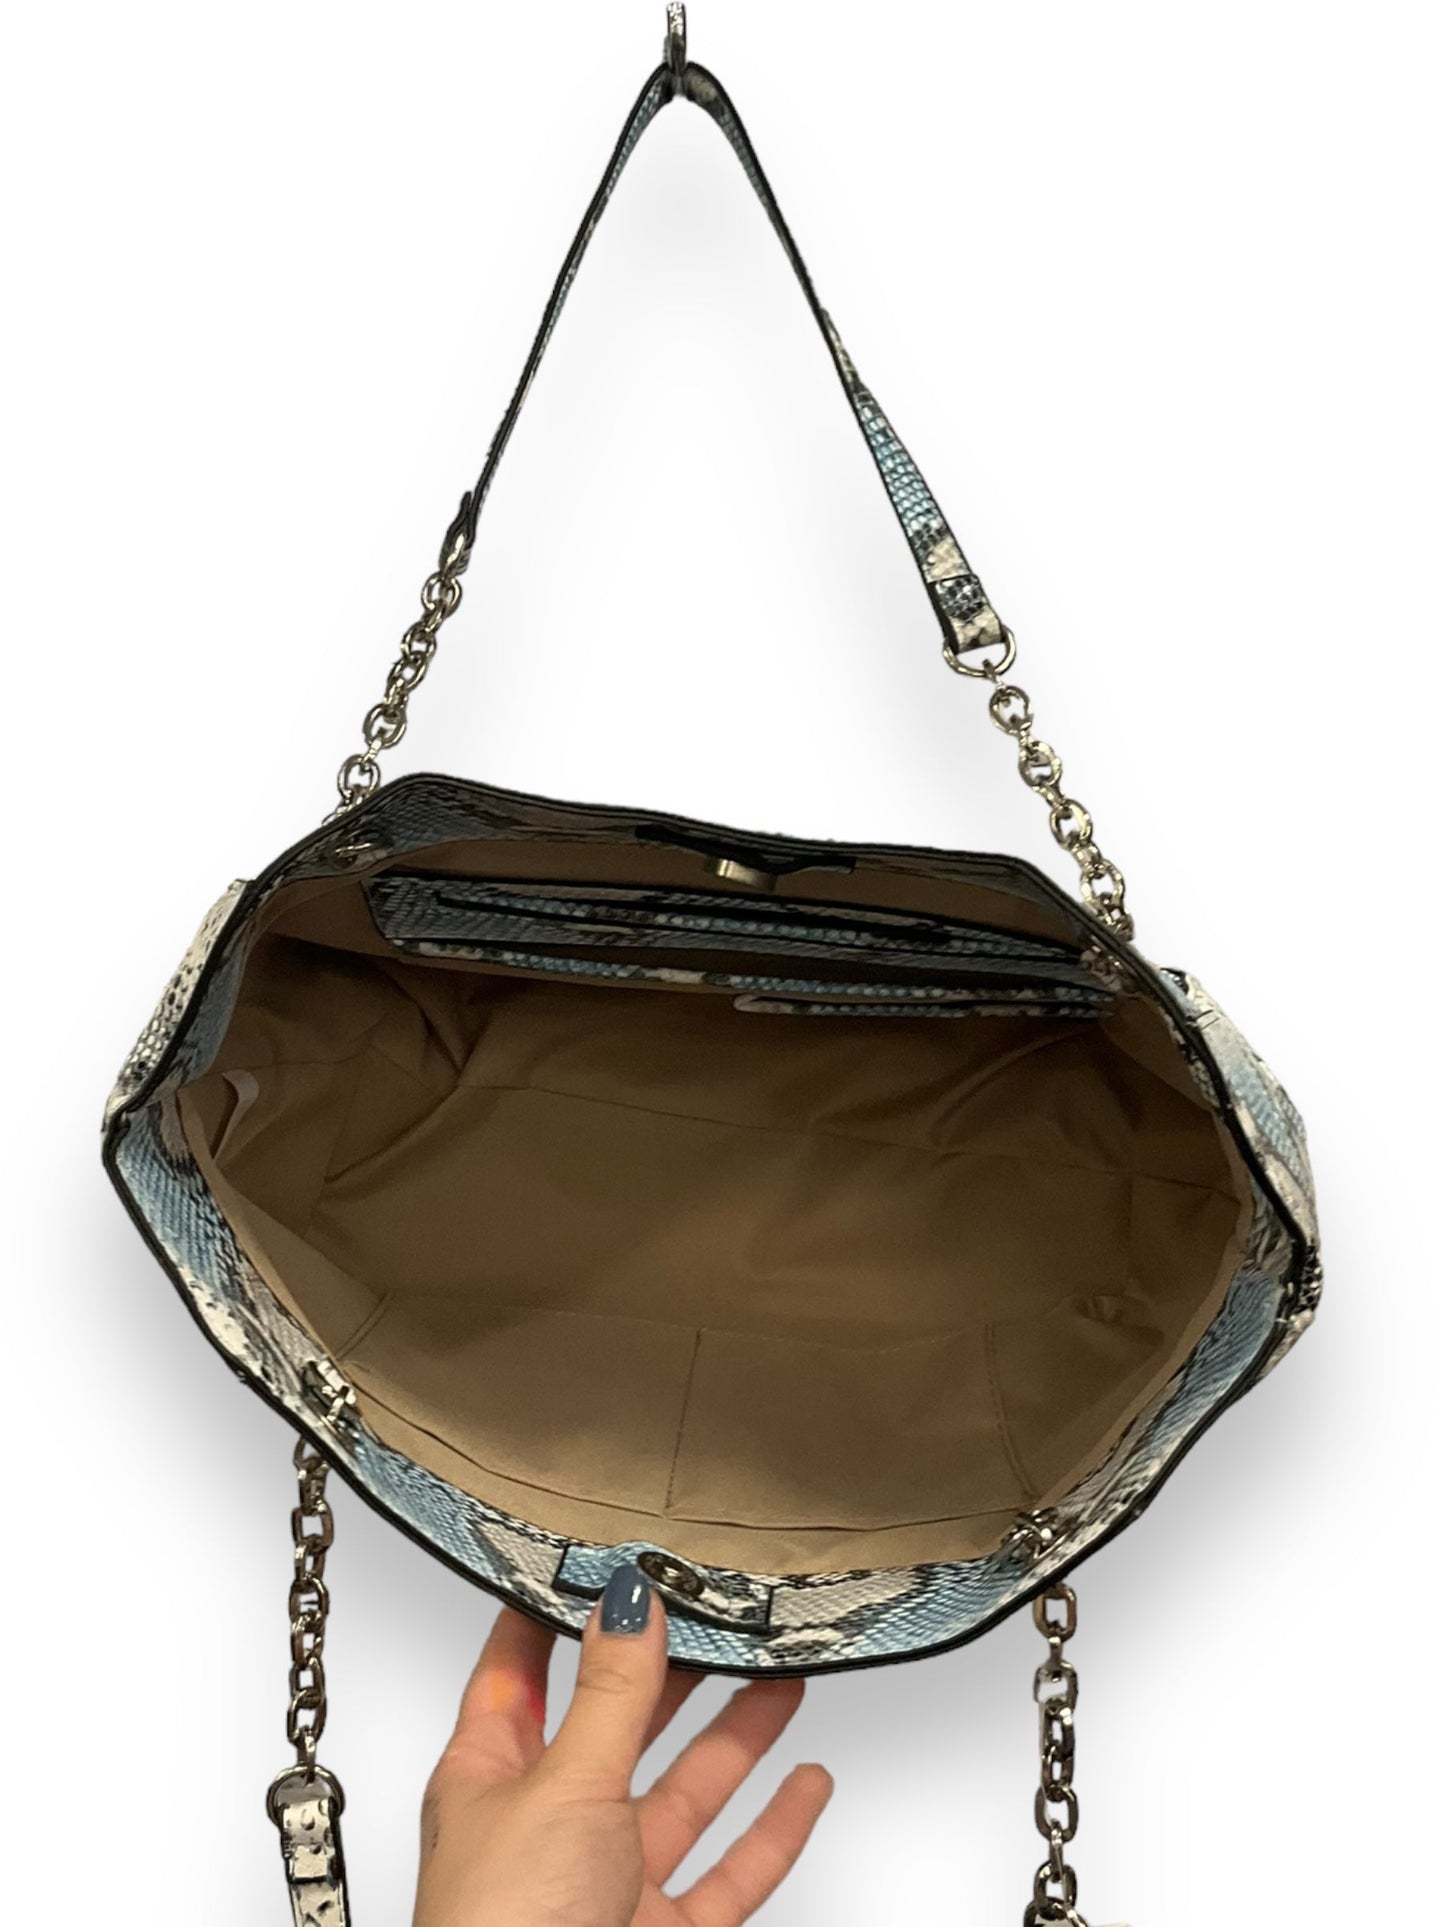 Handbag By New Directions  Size: Medium